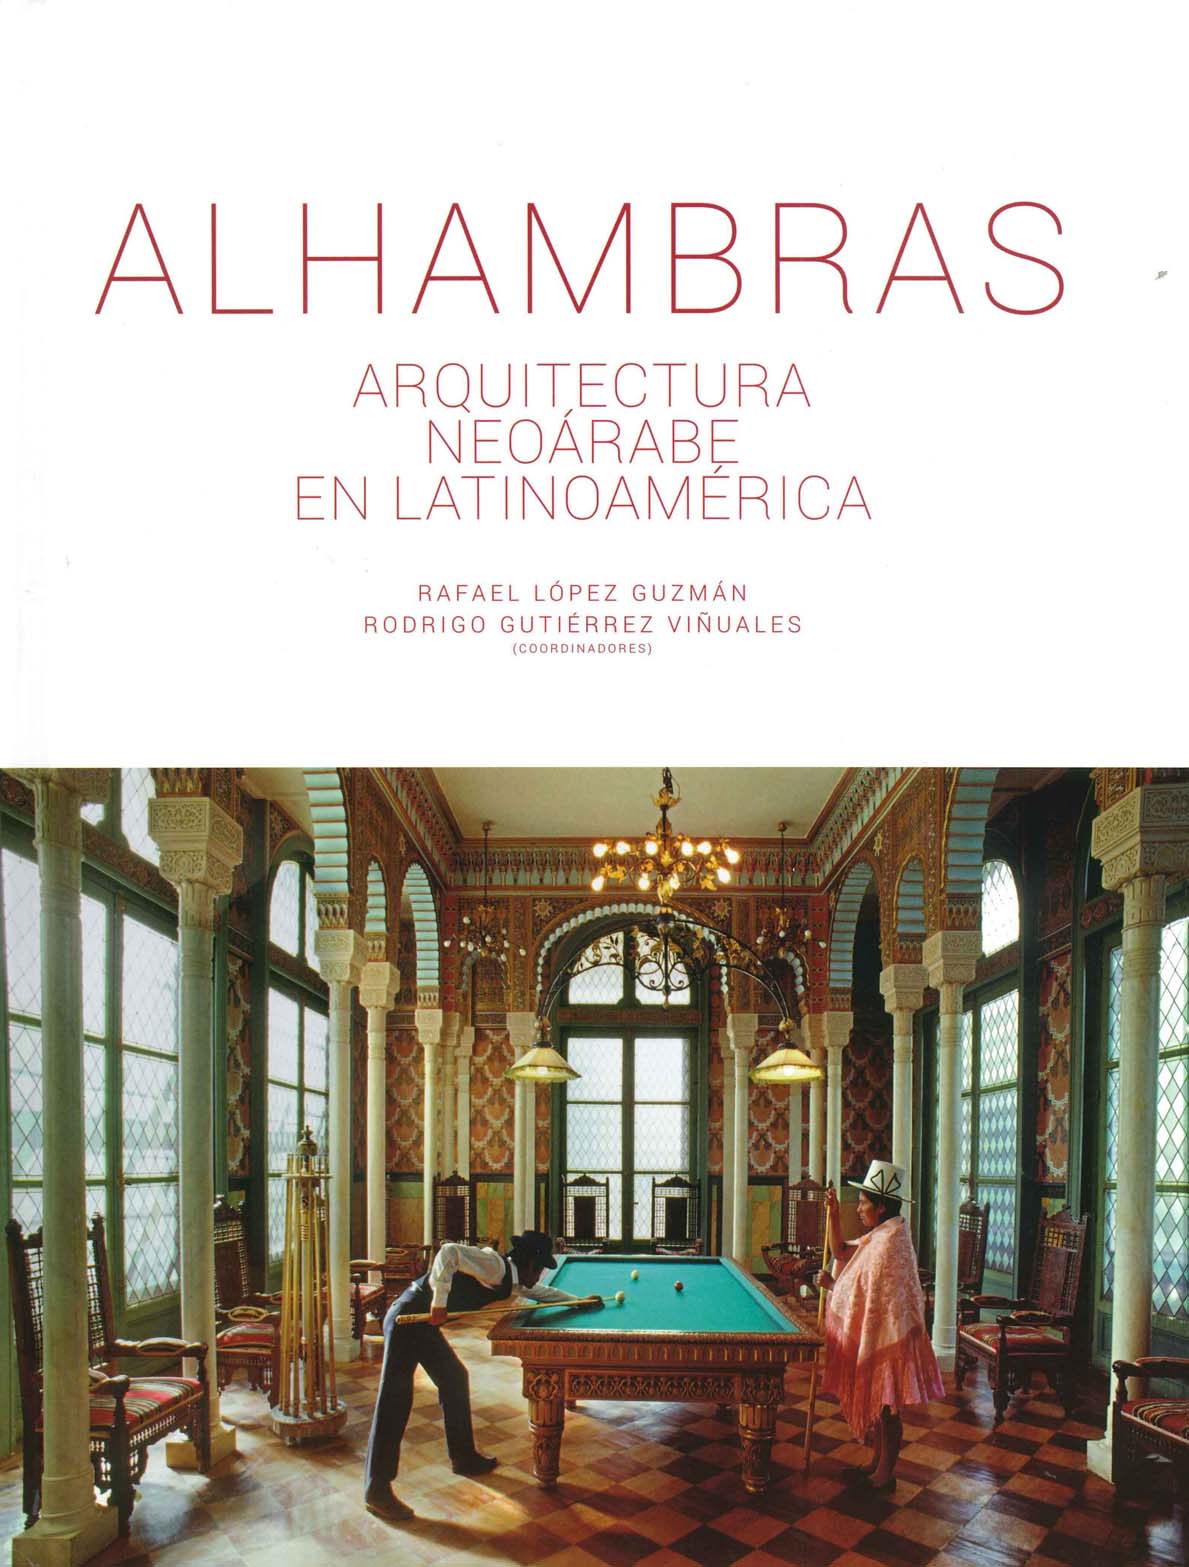 Alhambras: arquitectura neoárabe en Latinoamérica